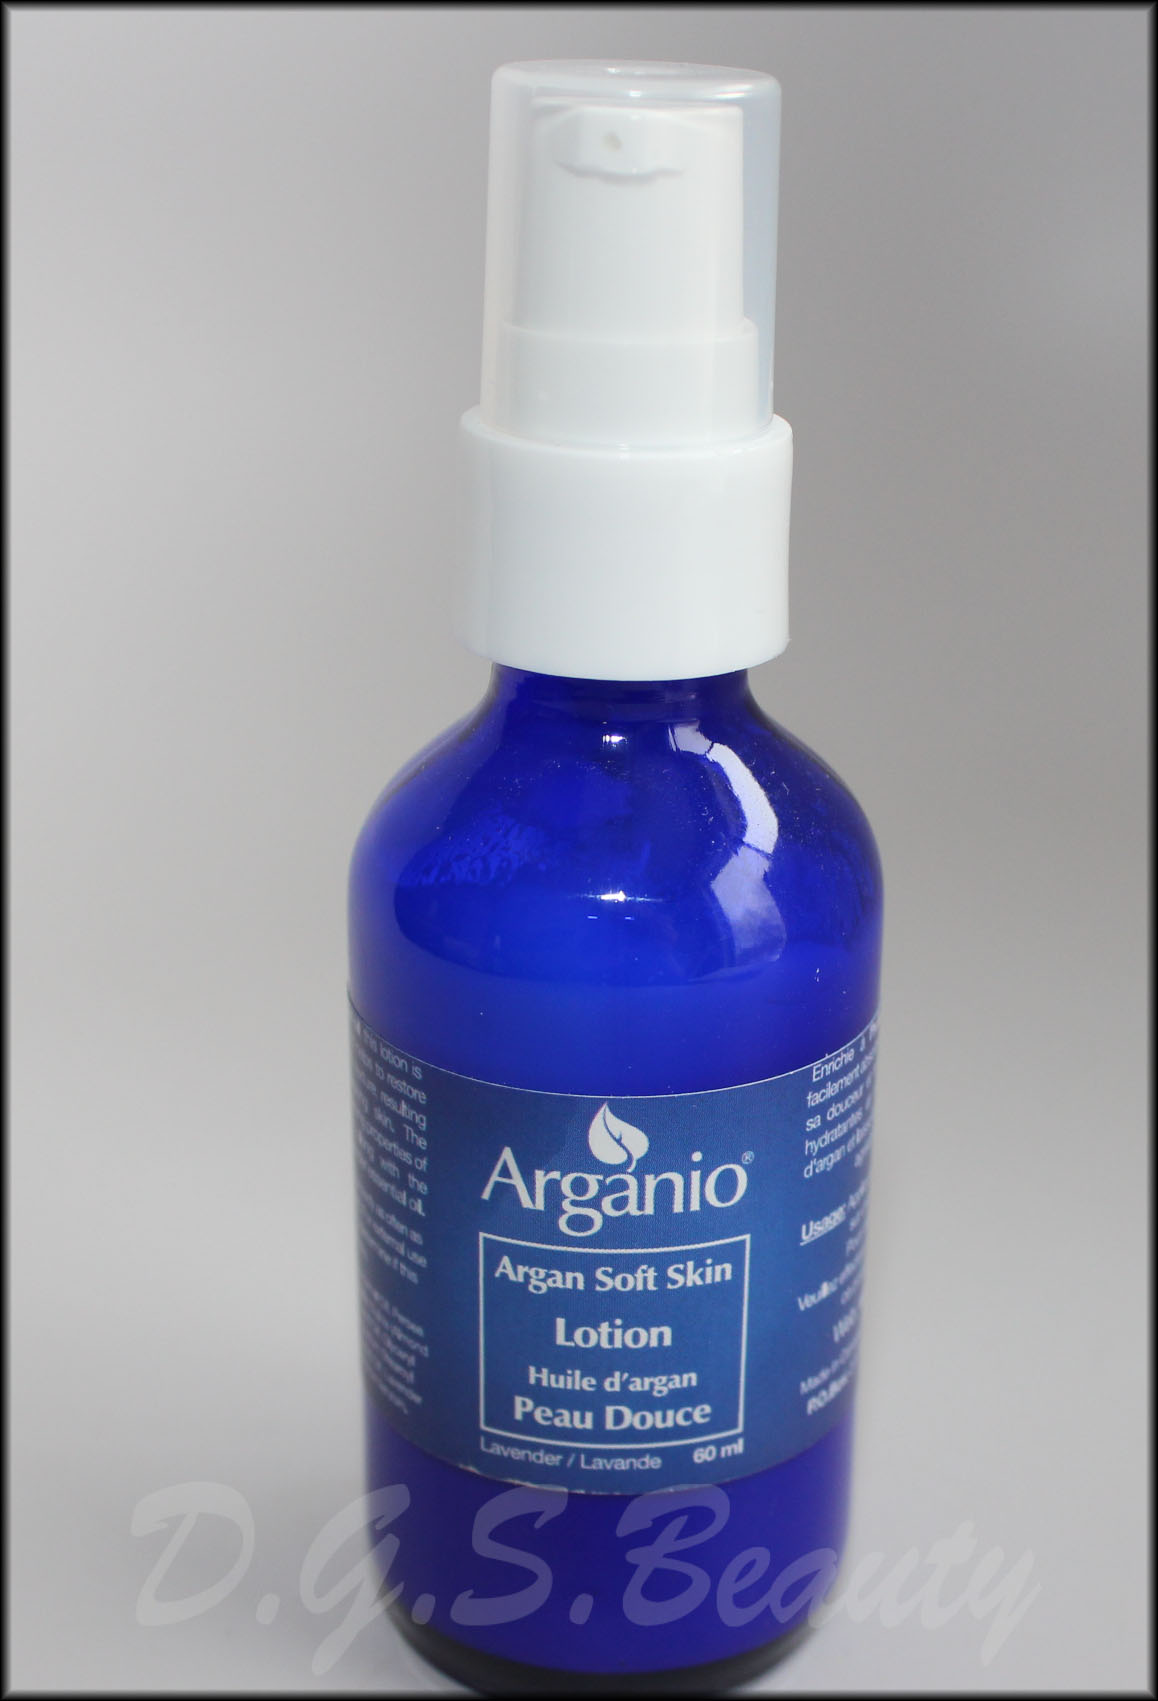 Arganio Argan Soft Skin Lotion Review